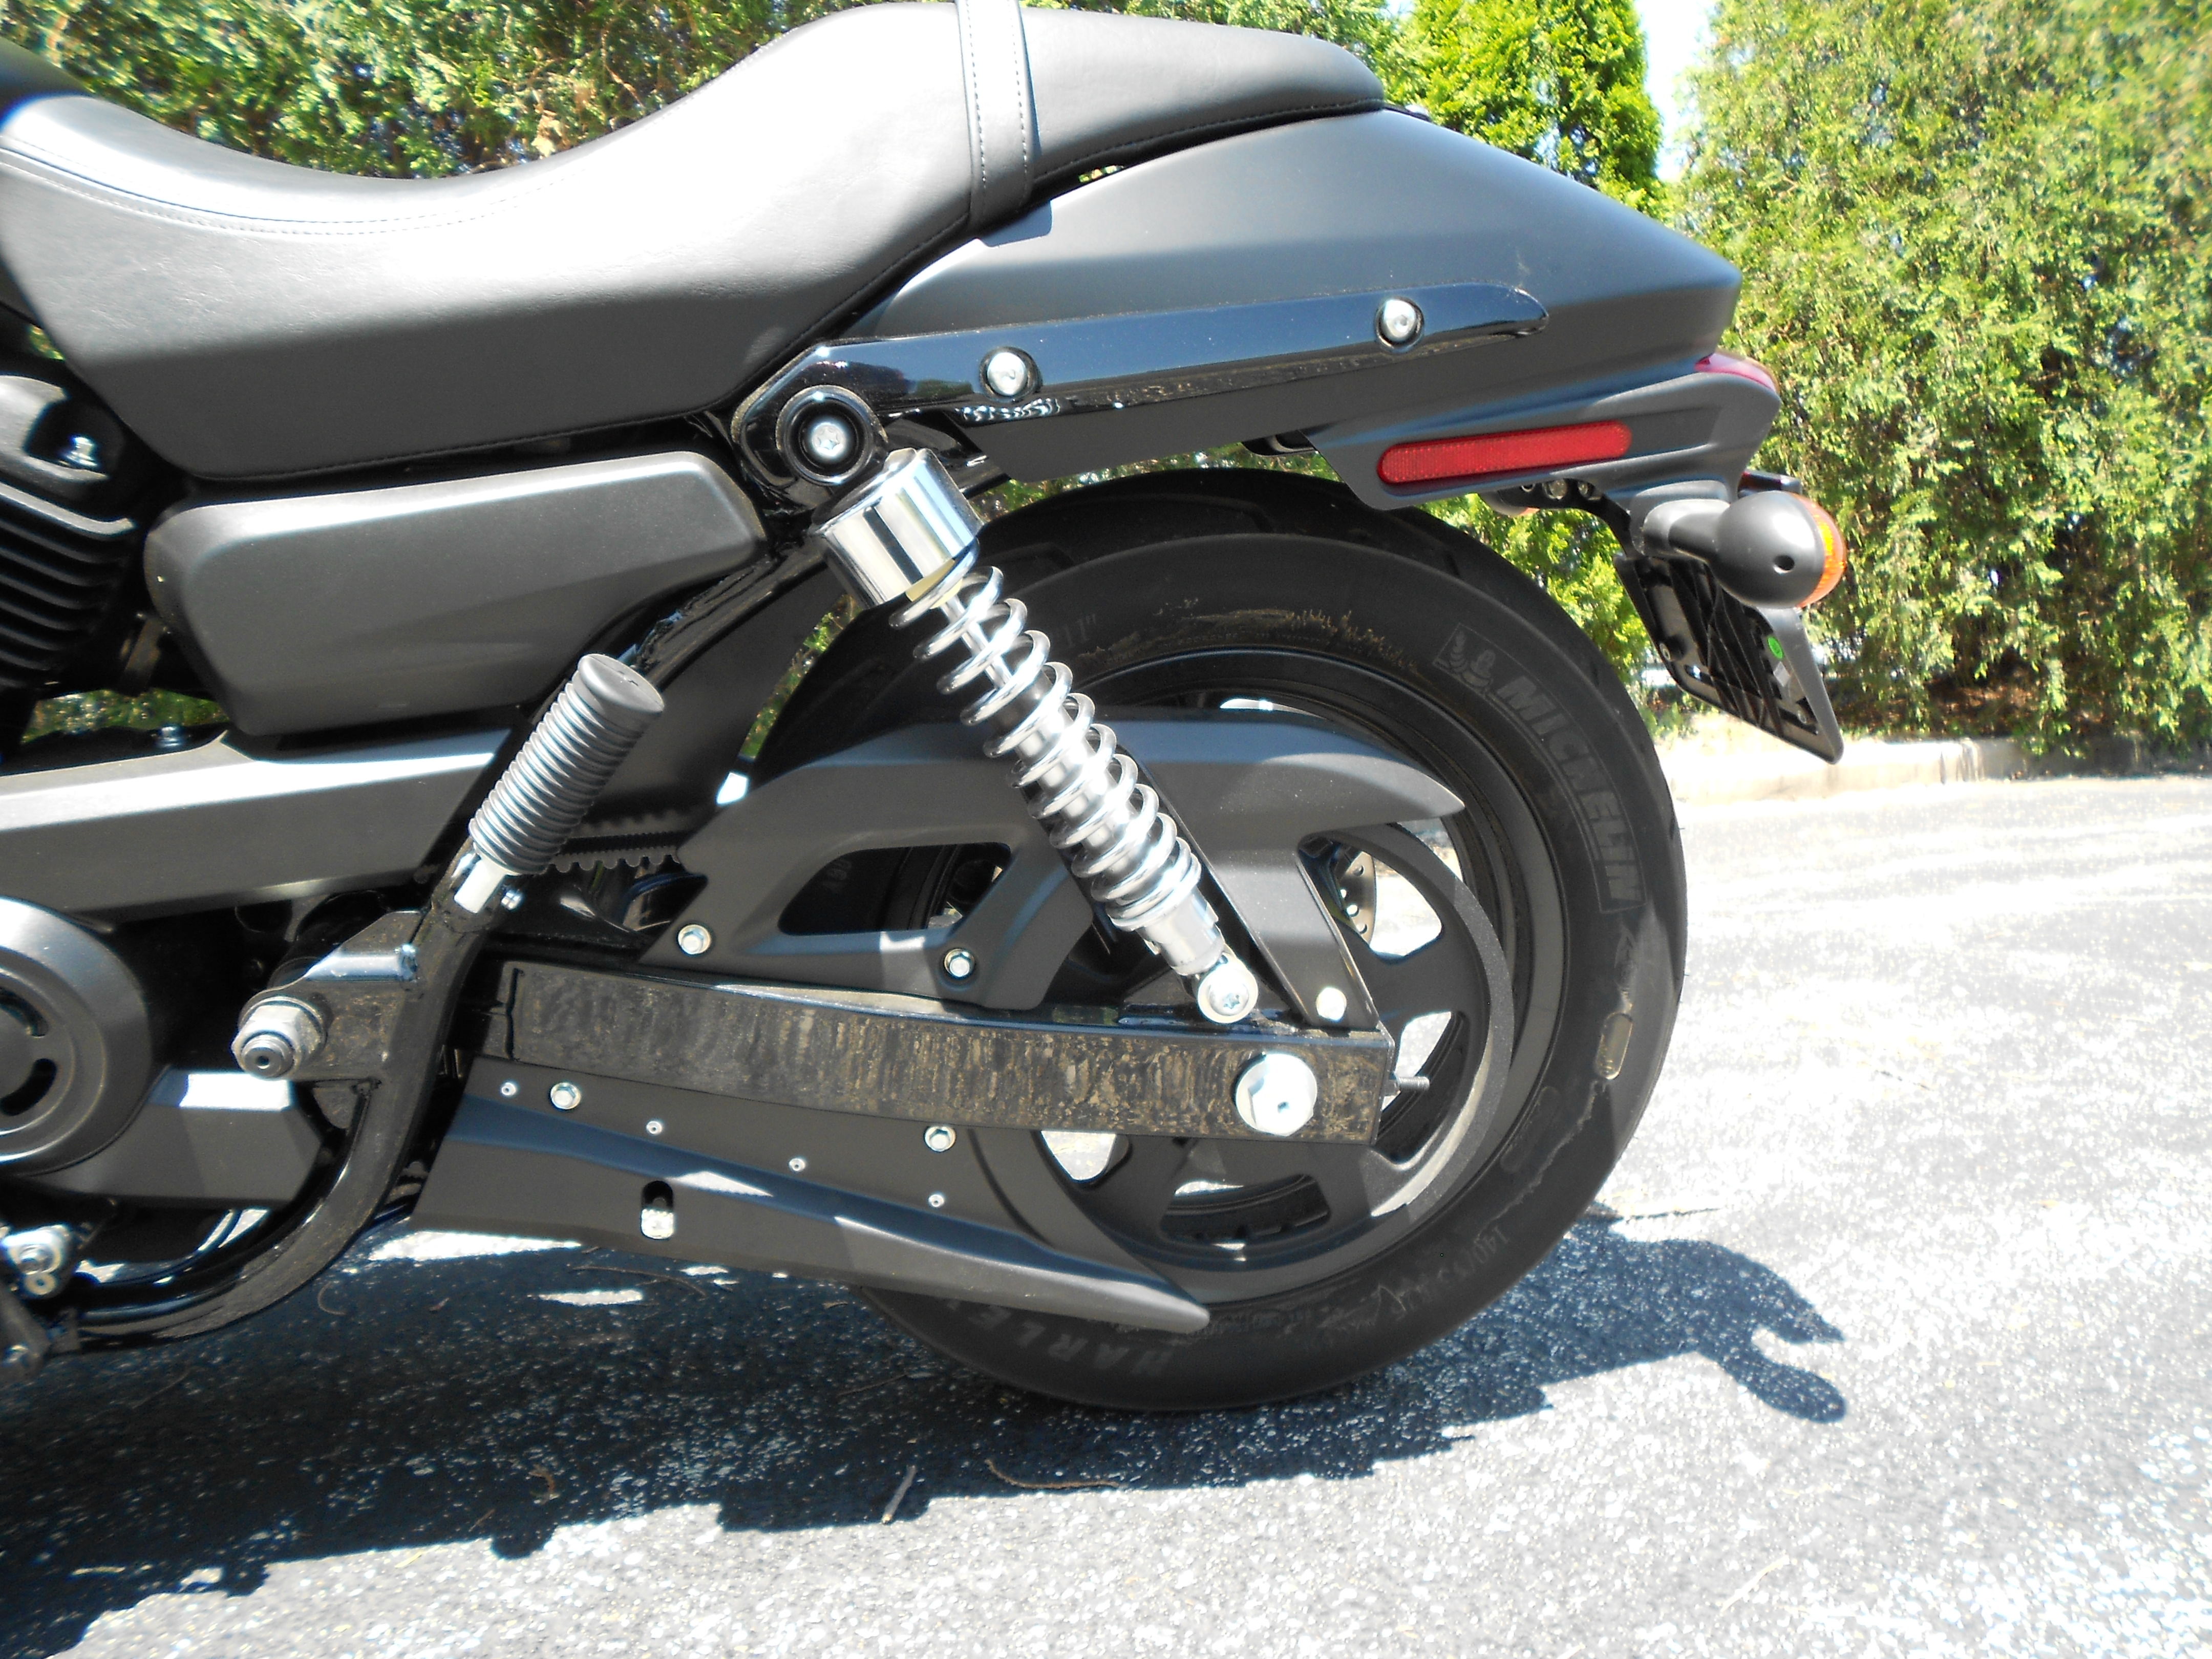 Harley Davidson Street 500 Ken Glassman S Ride Reviews